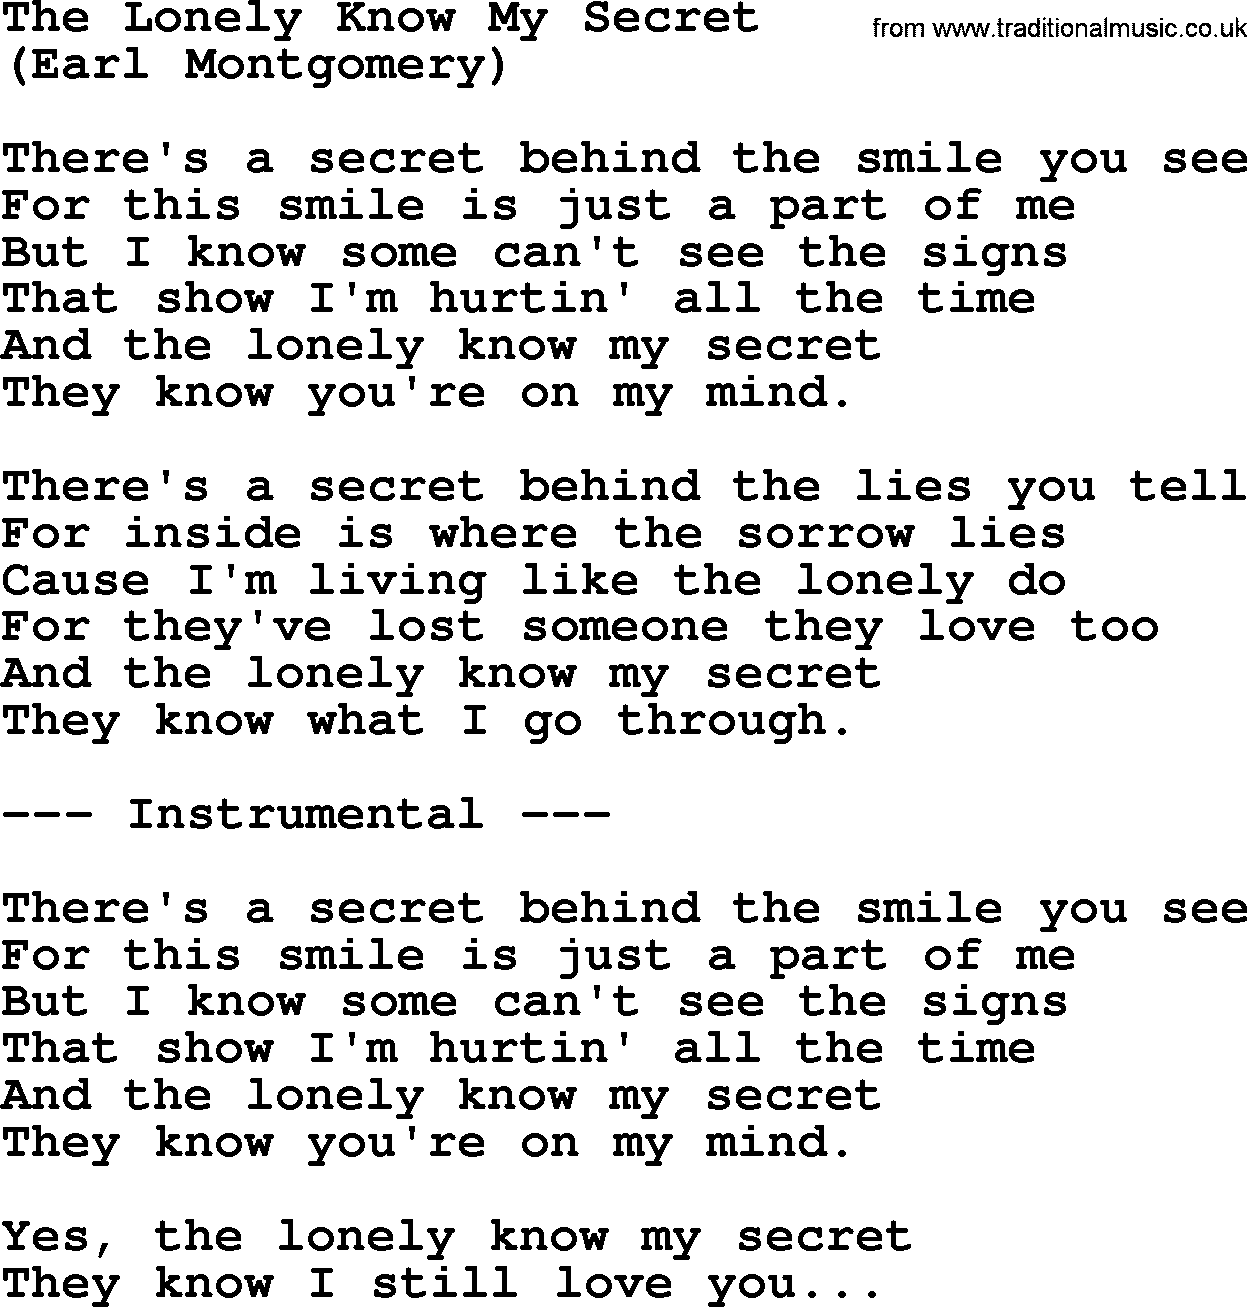 George Jones song: The Lonely Know My Secret, lyrics